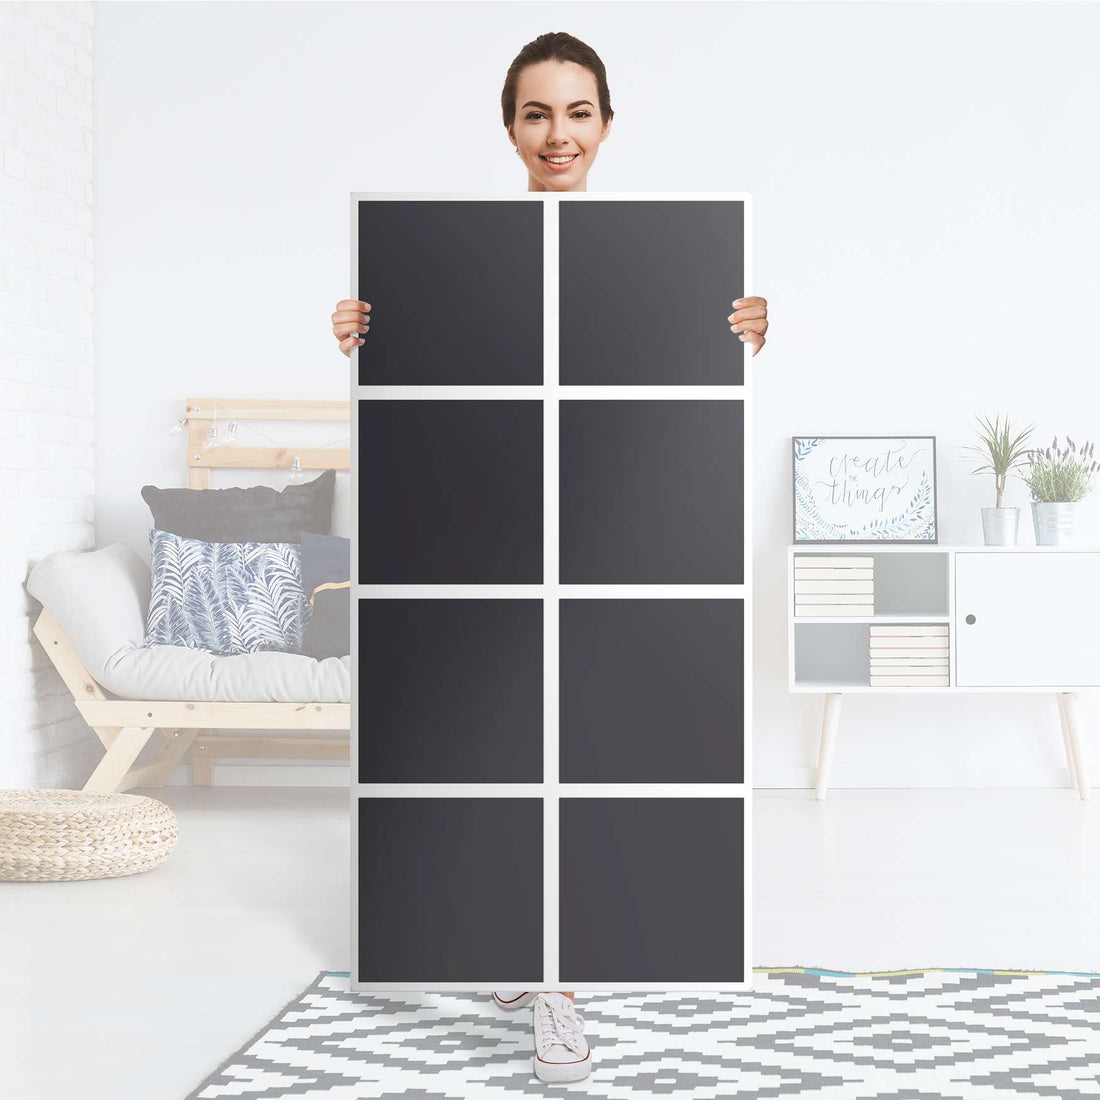 Folie für Möbel Grau Dark - IKEA Kallax Regal 8 Türen - Folie